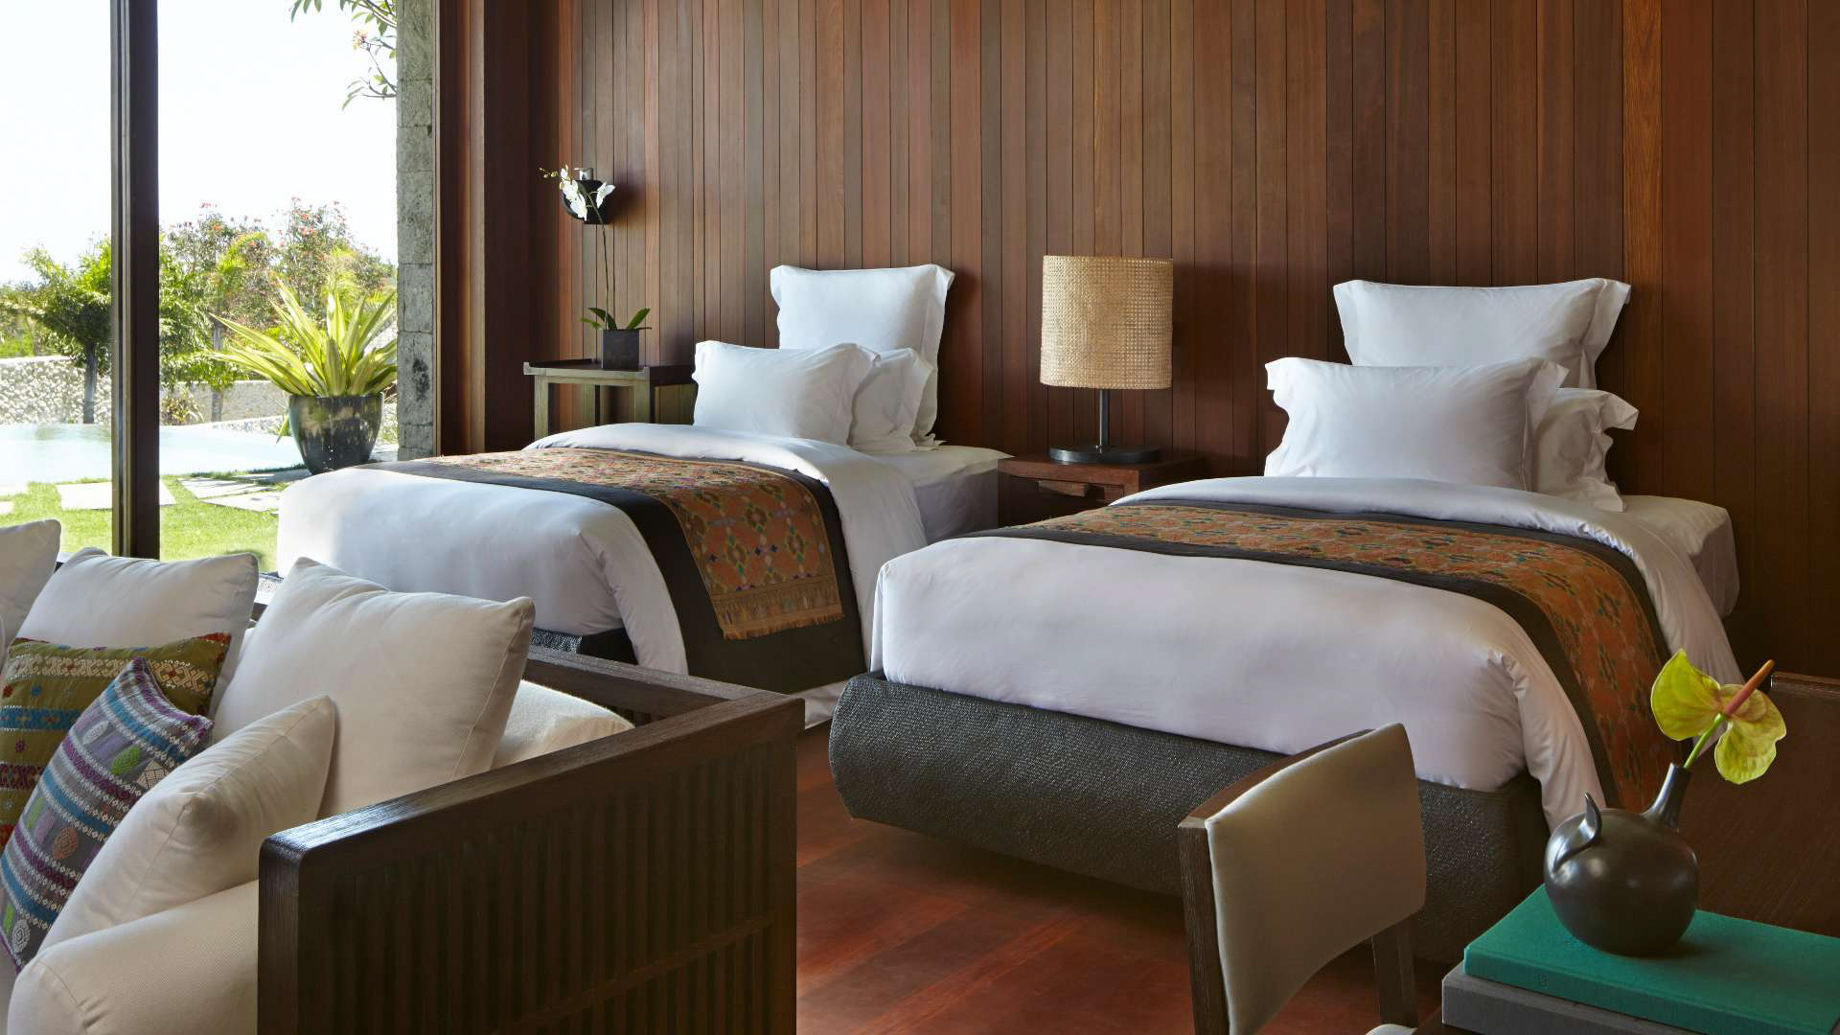 Bvlgari Resort Bali – Uluwatu, Bali, Indonesia – The Mansions Bedroom